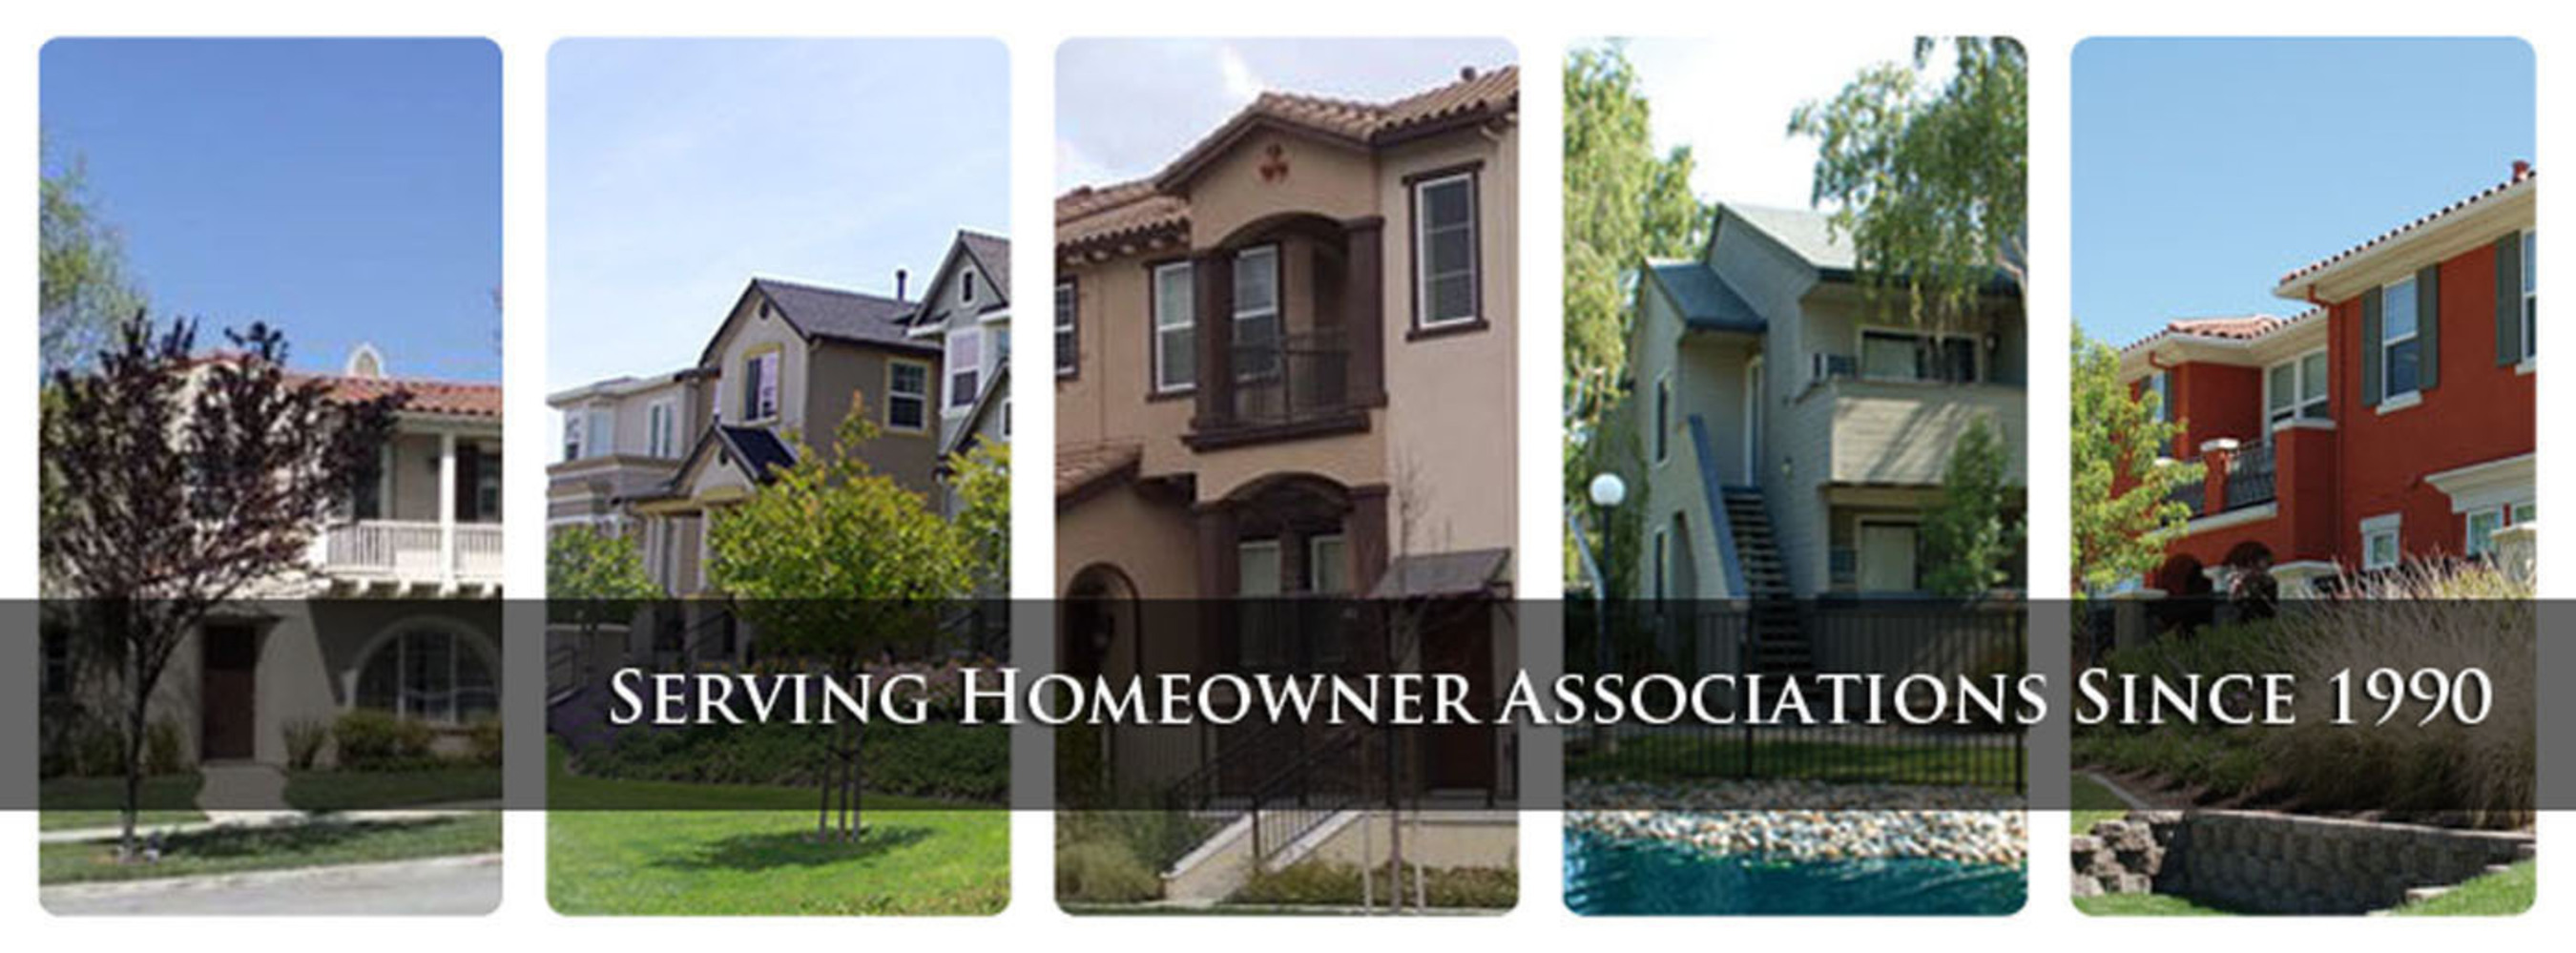 Common Interest Management Services. Serving Homeowner Associations Since 1990.